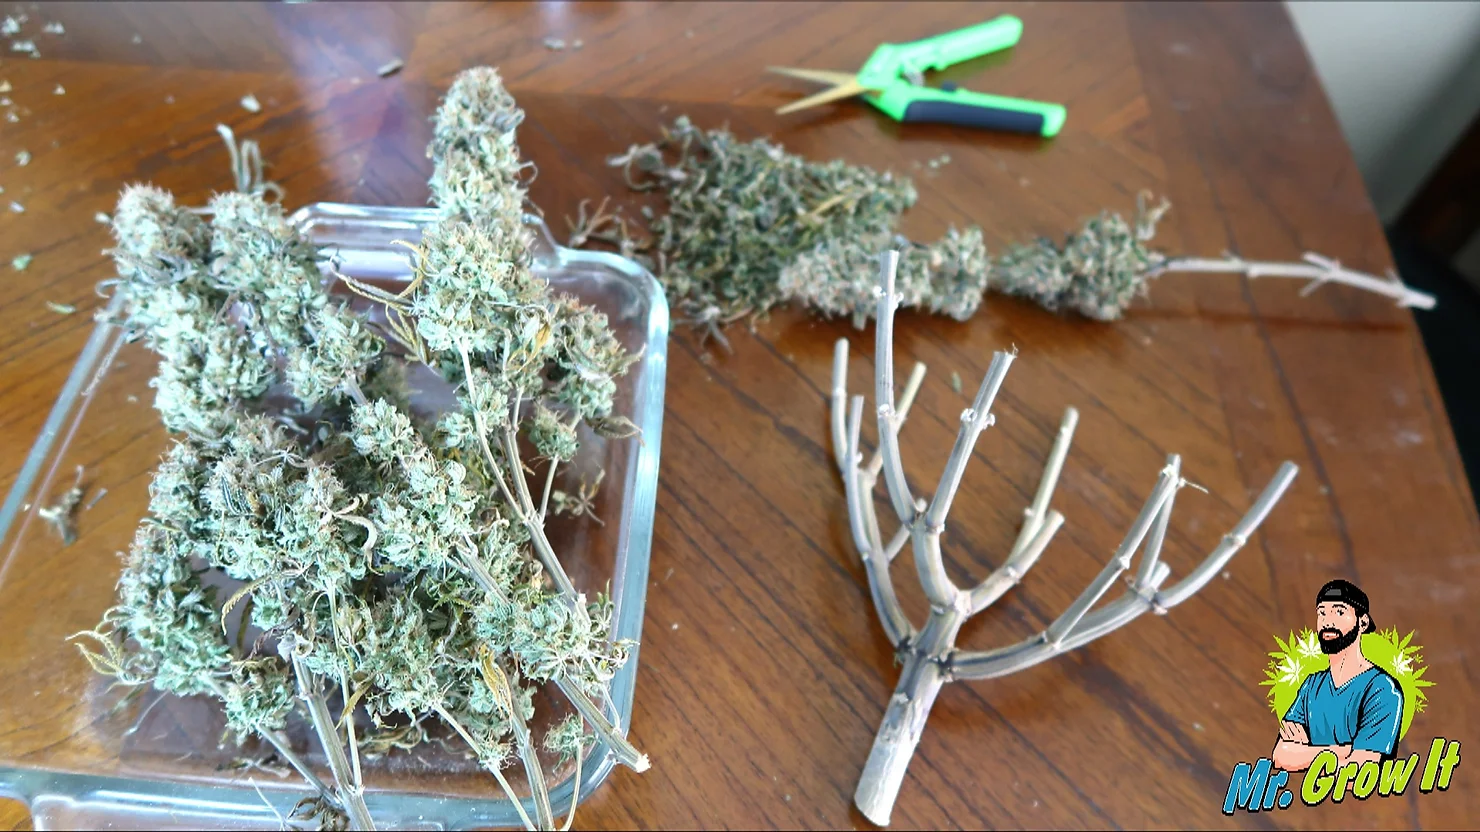 How To Trim Cannabis Plants!